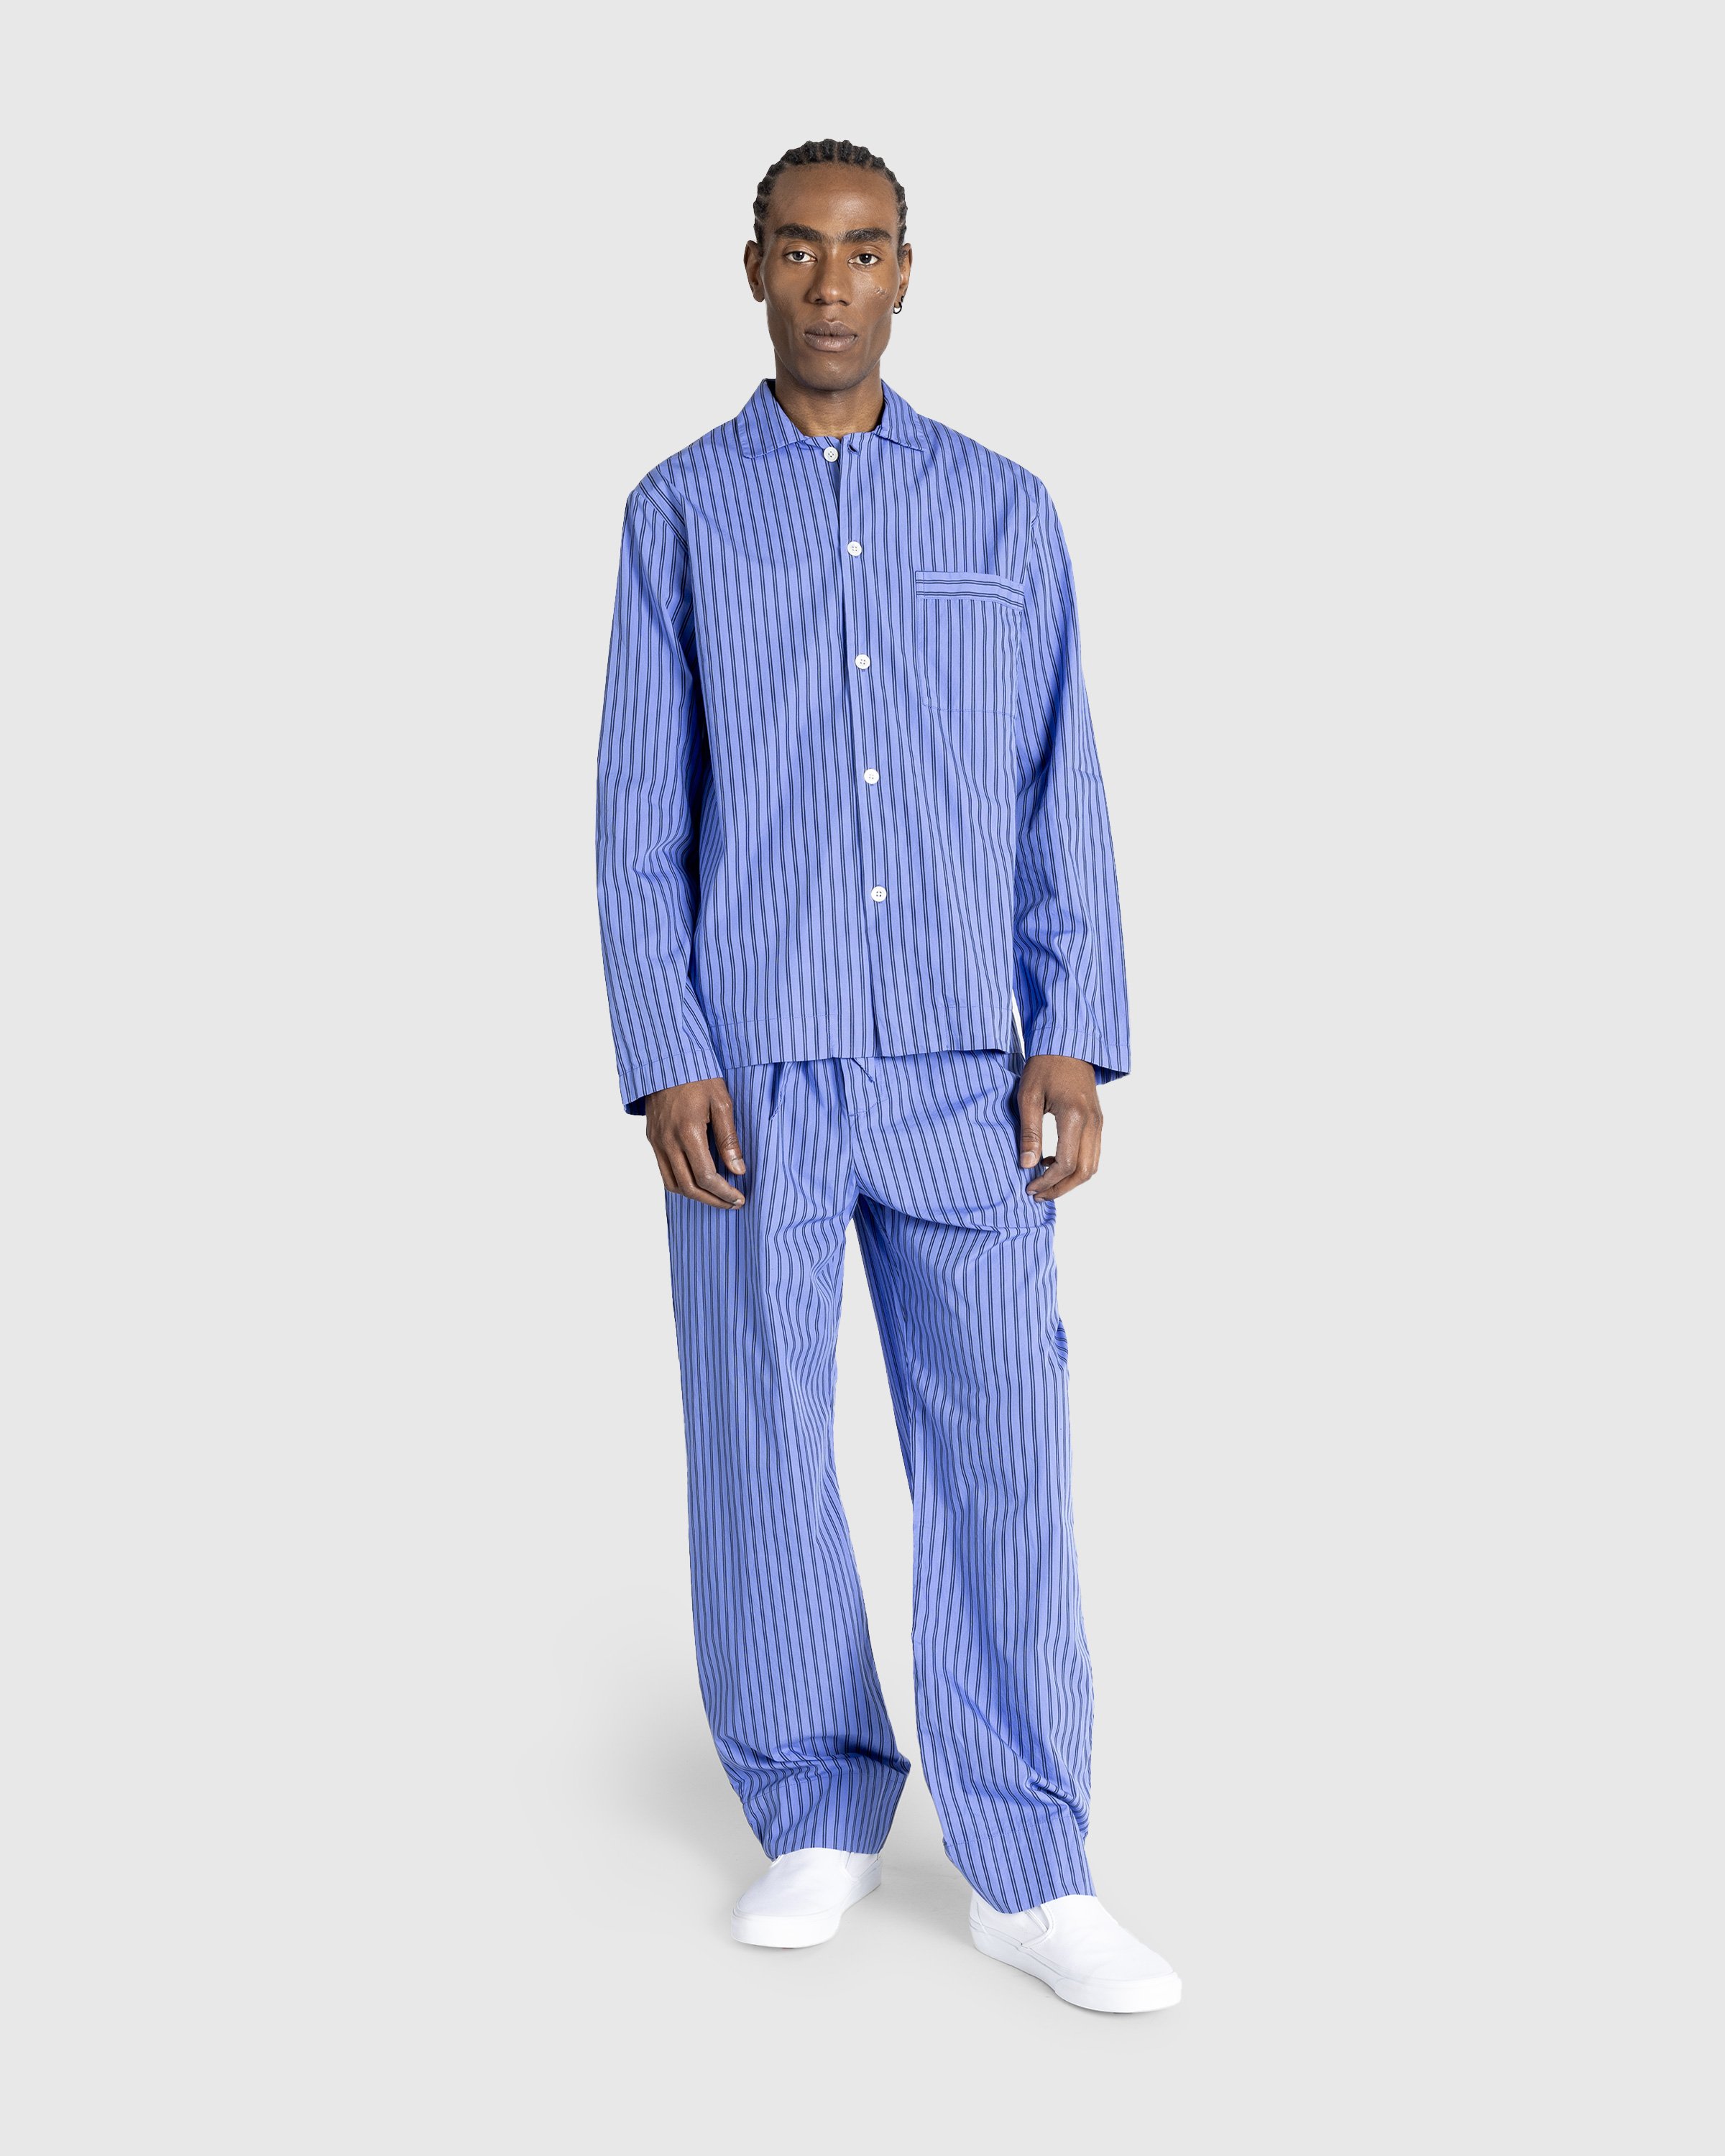 Tekla - Cotton Poplin - Pyjamas Pants Boro Stripes - Clothing - Blue - Image 3